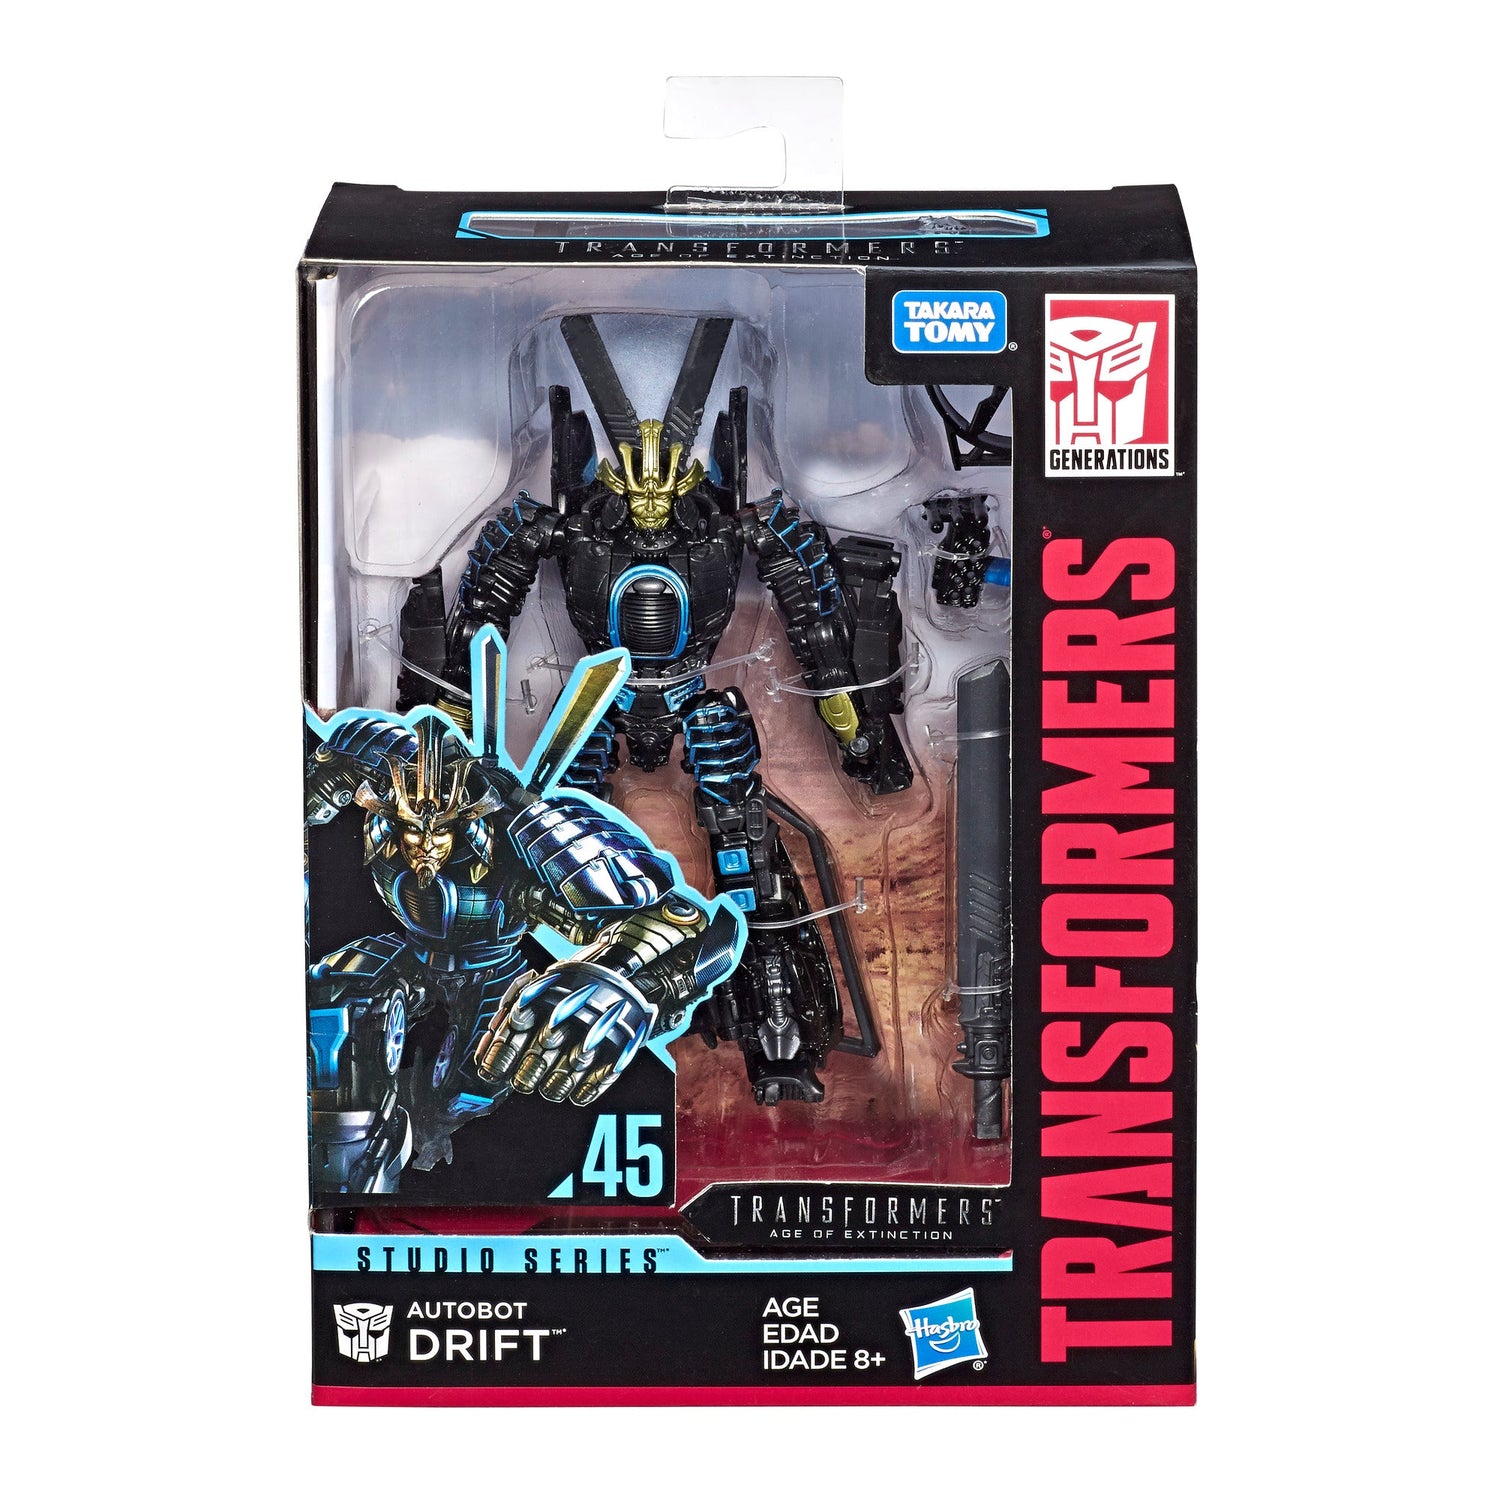 Transformers Studio Series 45 Deluxe Class: Age of Extinction Movie Autobot Drift Figure